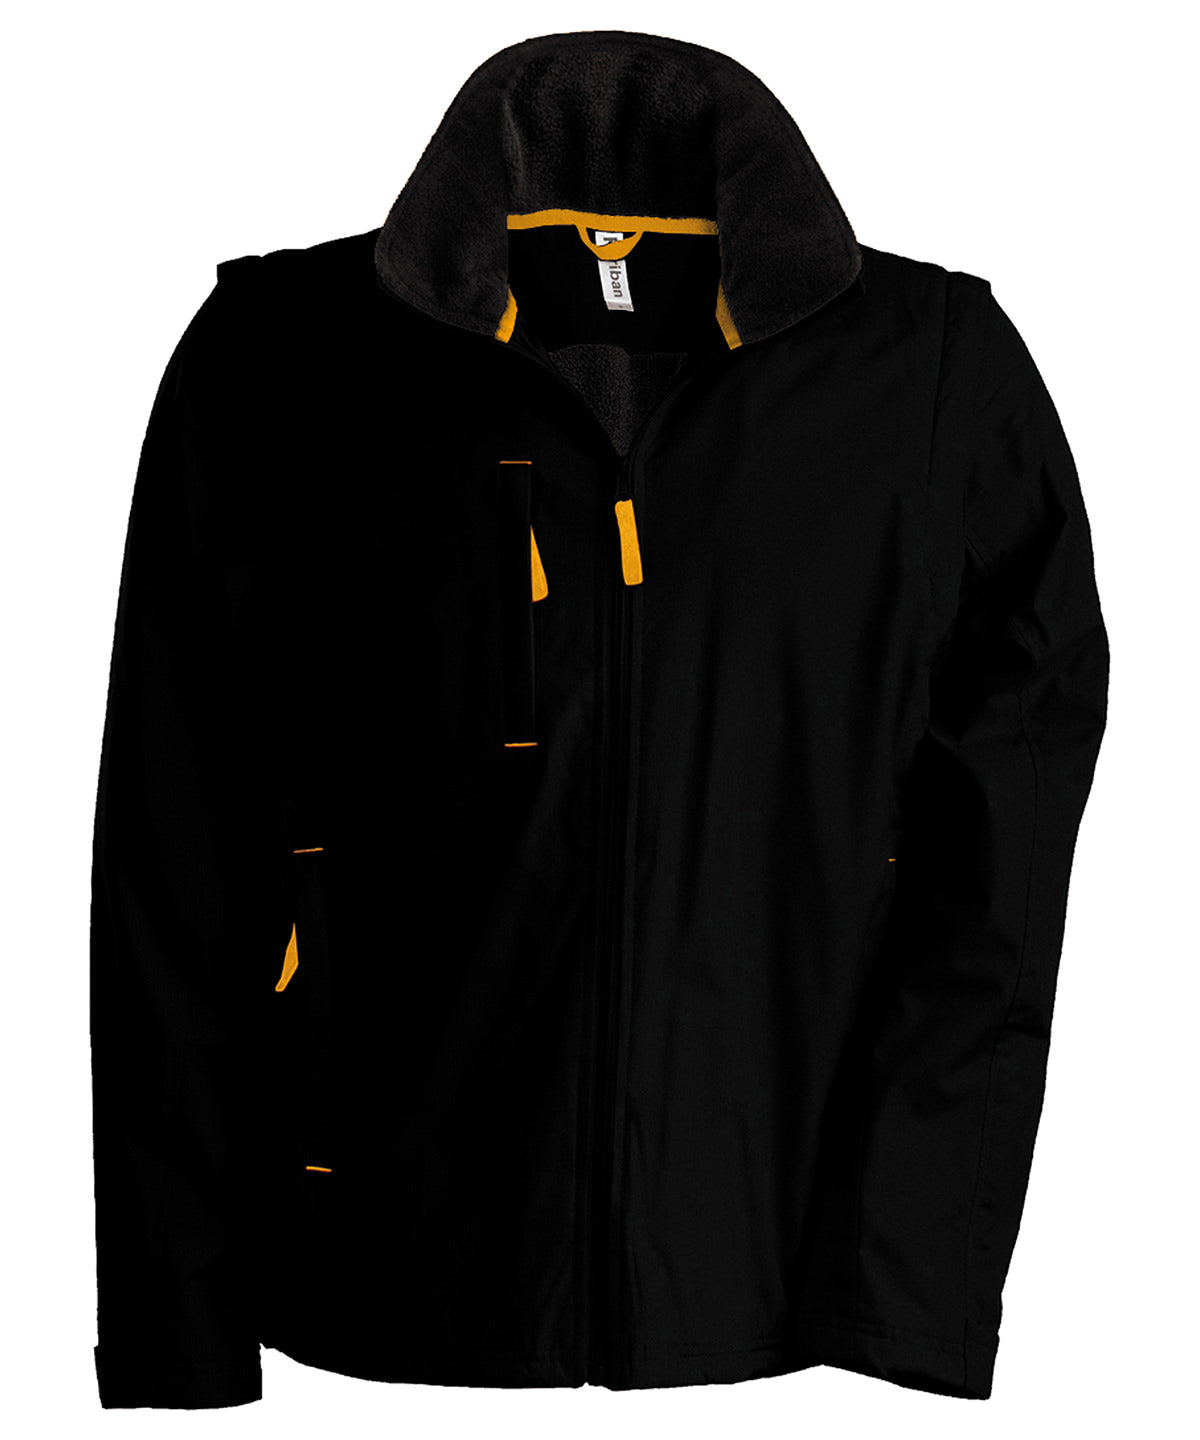 Jakkar - Score Contrast Detachable Sleeve Blouson Jacket